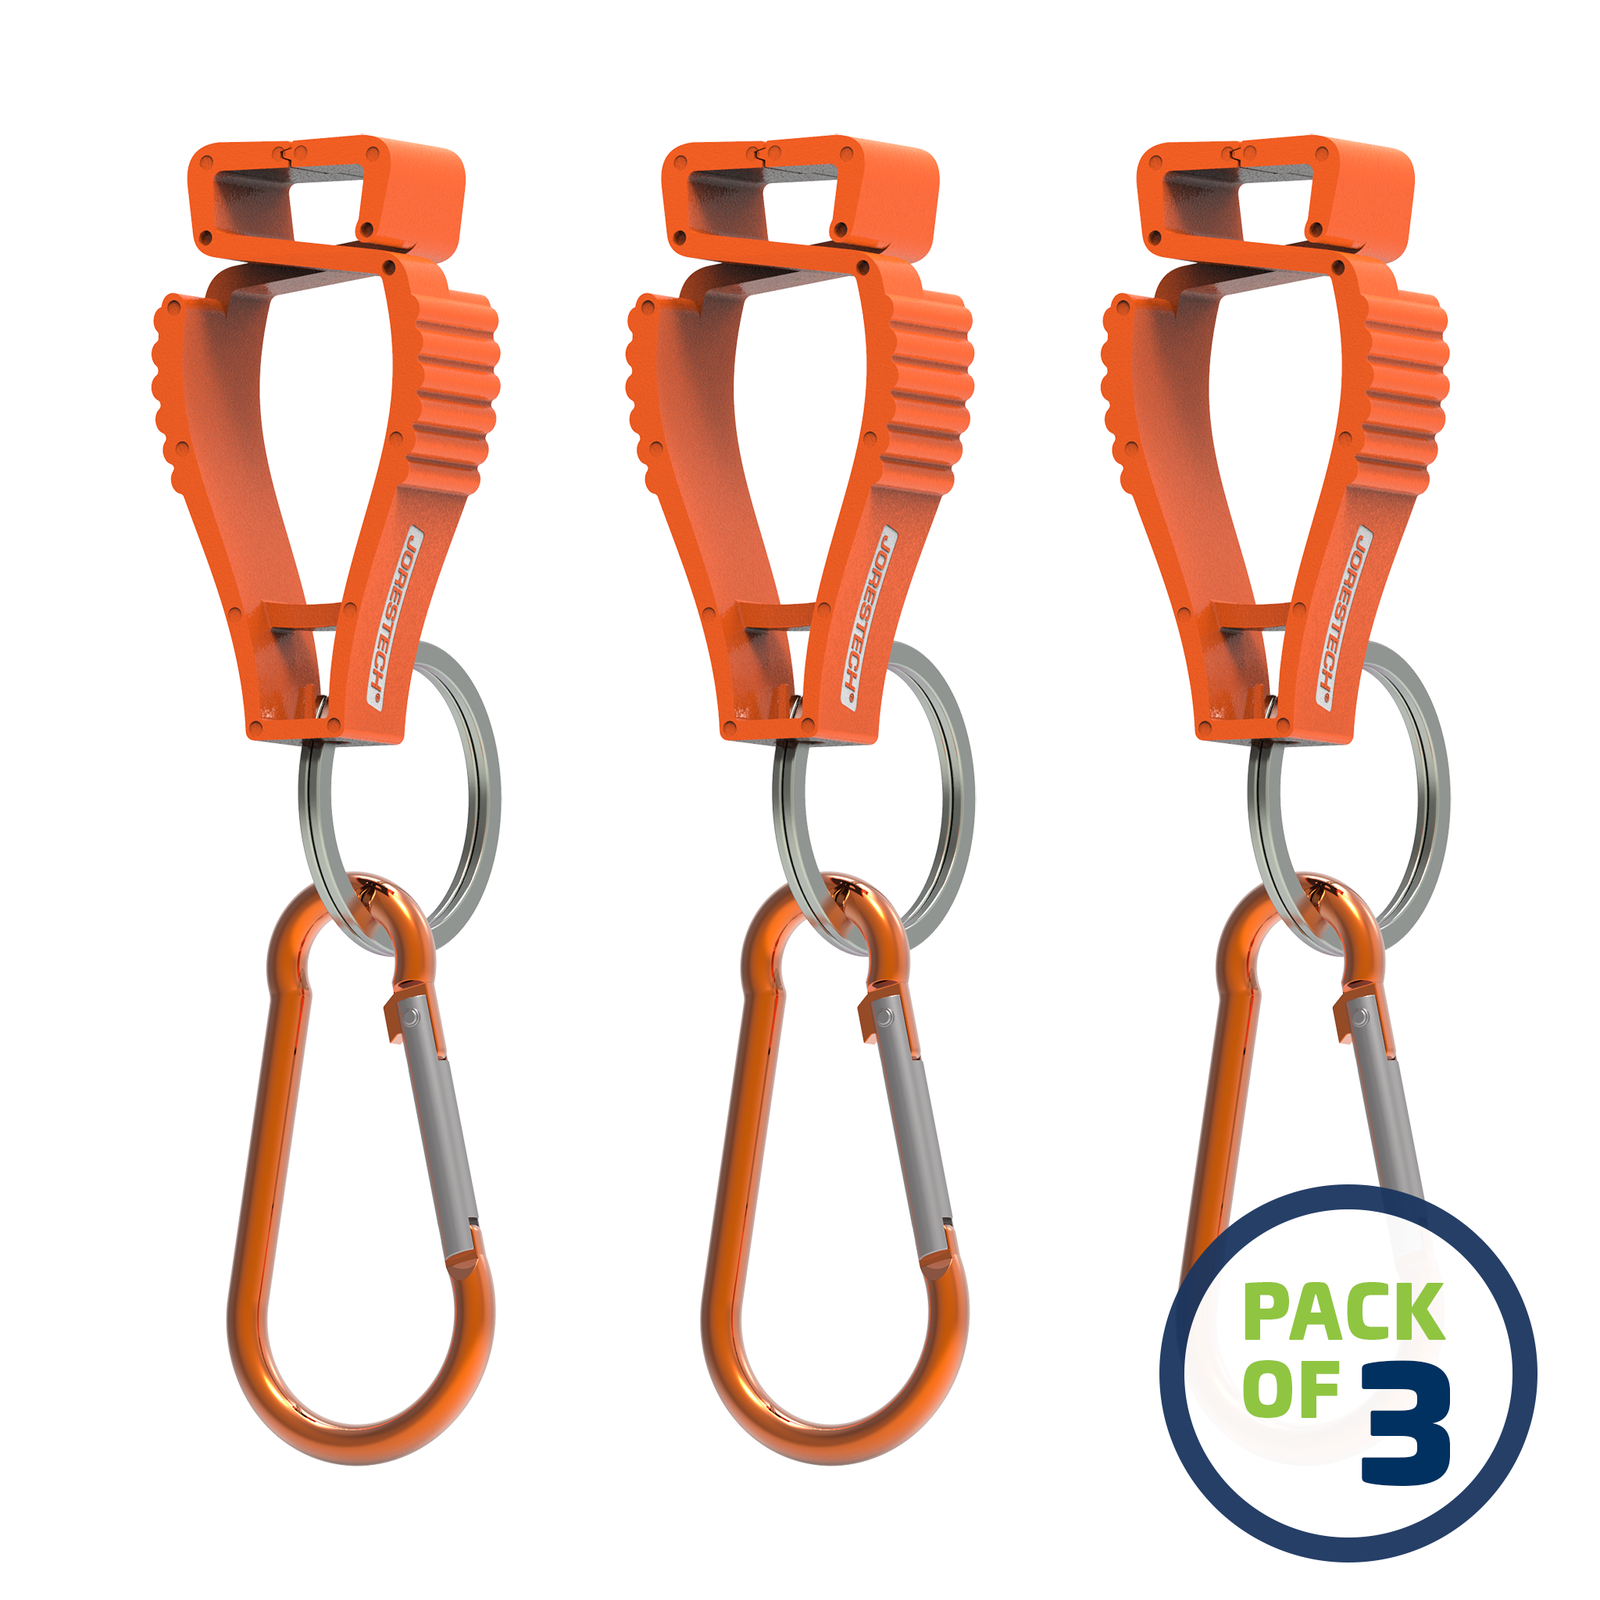 Orange JORESTECH glove clip safety holders with carabiner